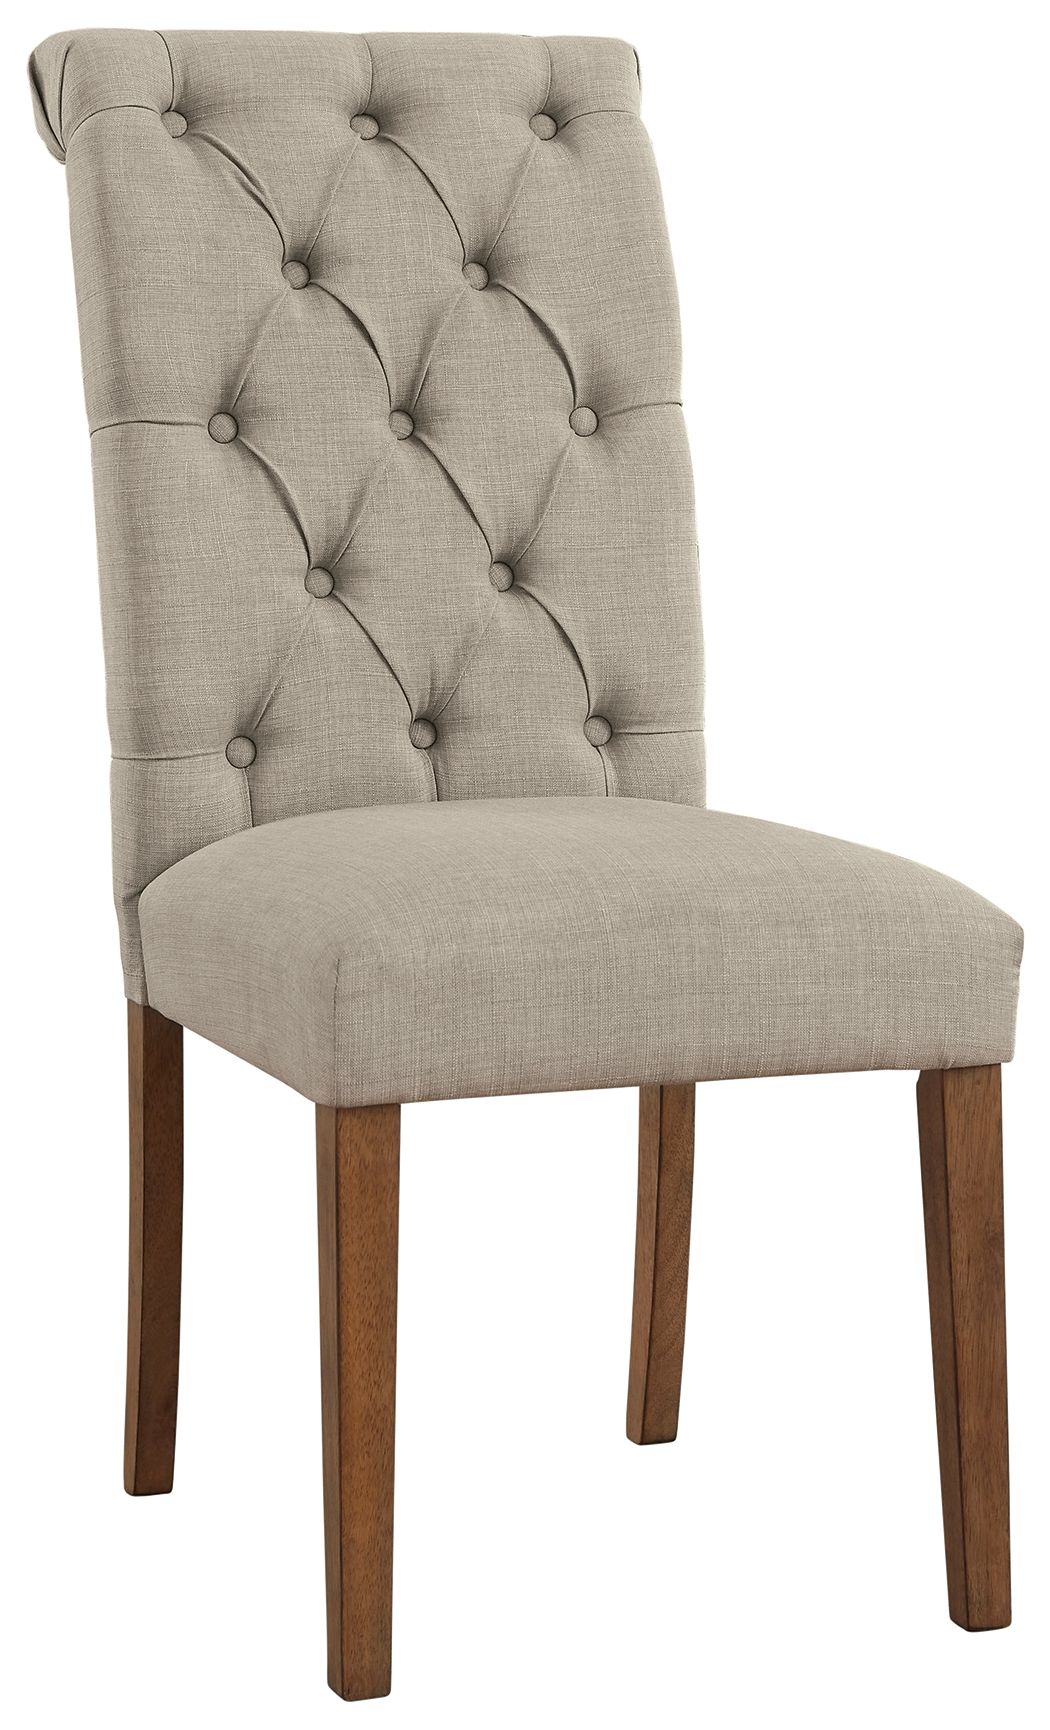 Harvina - Side Chair - Tony's Home Furnishings